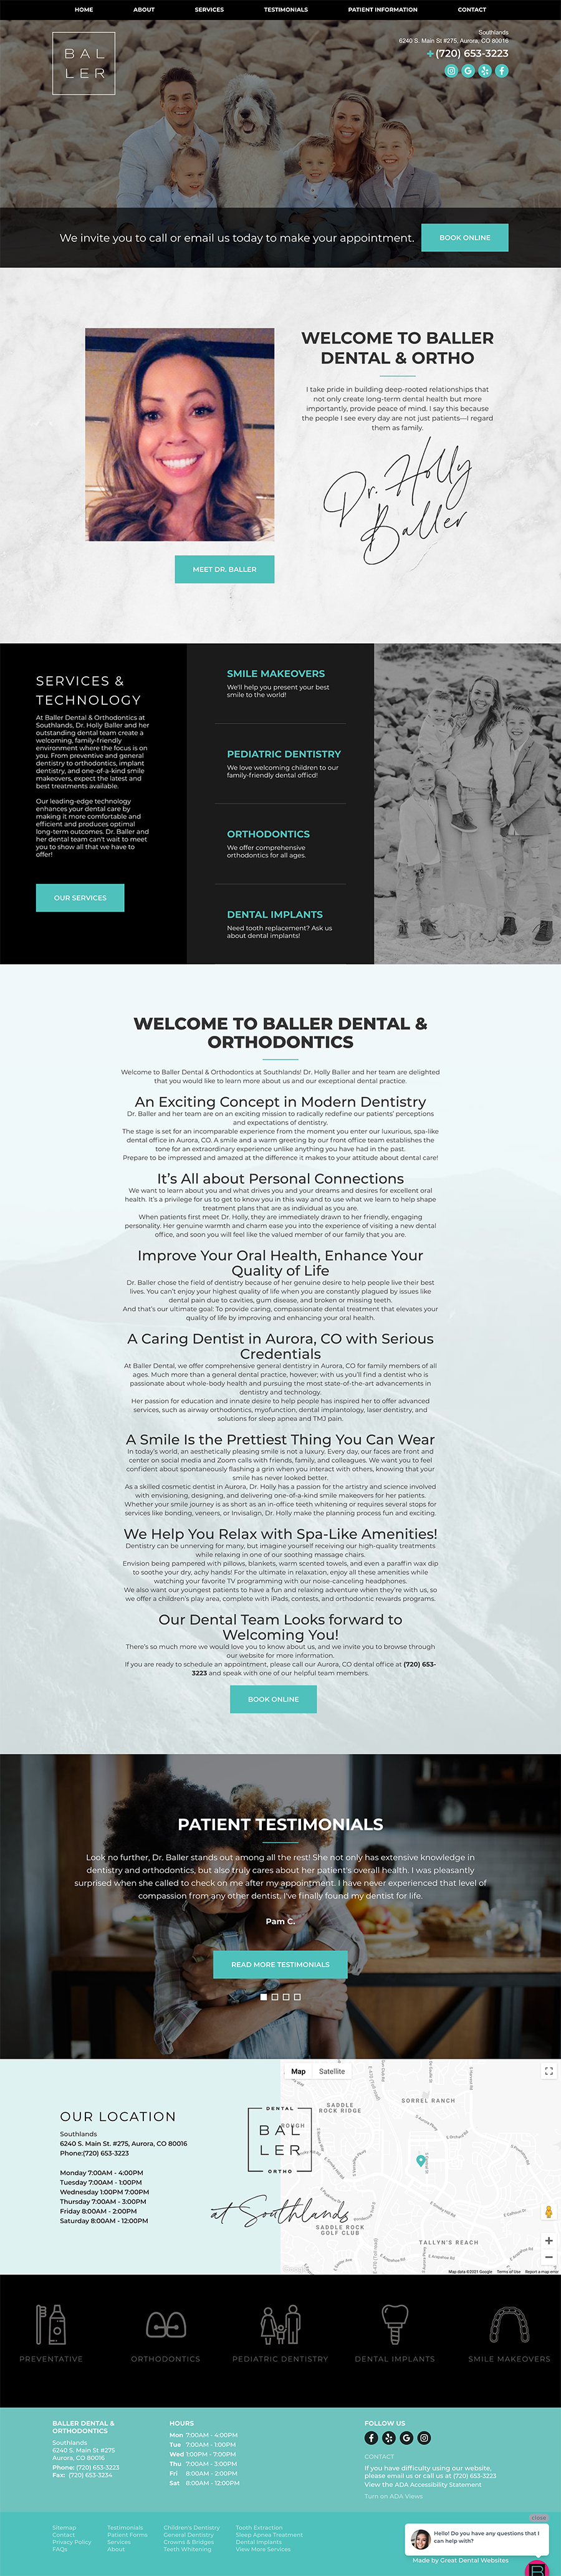 Baller dental and orthodontics gallery image